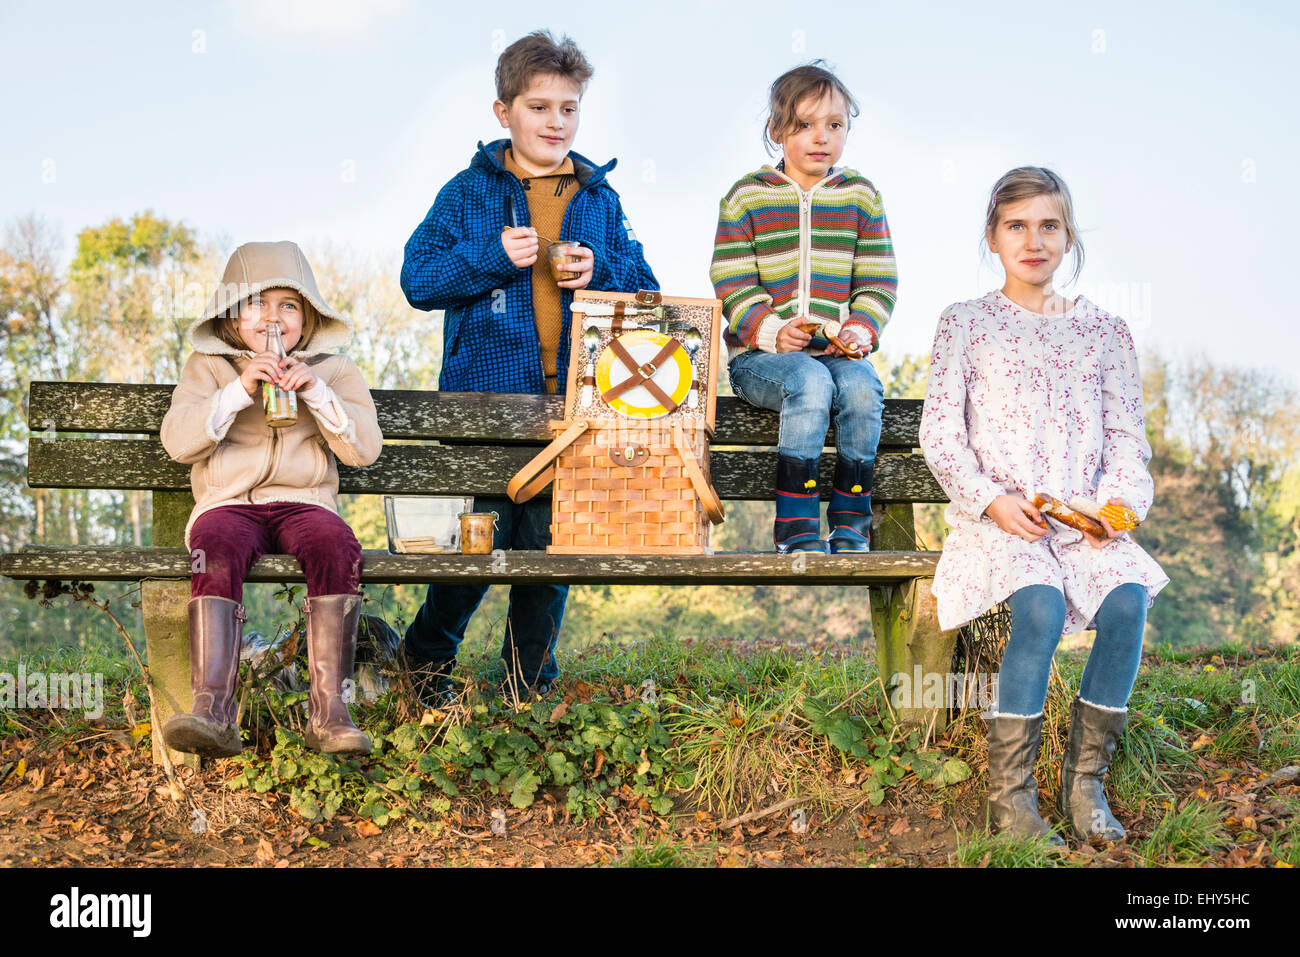 Children having picnic outdoors Stock Photo